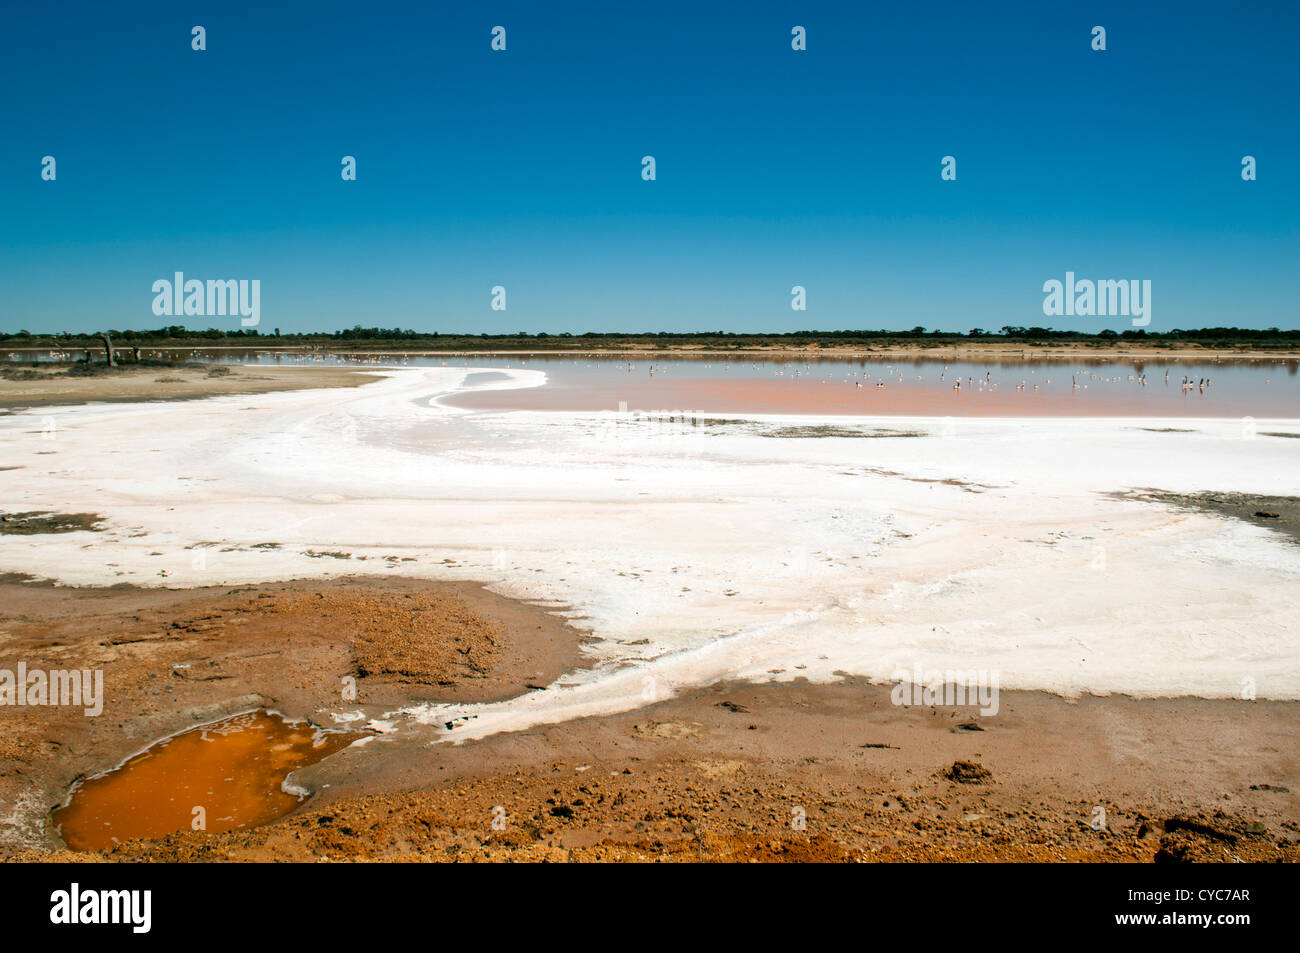 Salt lake, evidence of drought in rural Australia Stock Photo